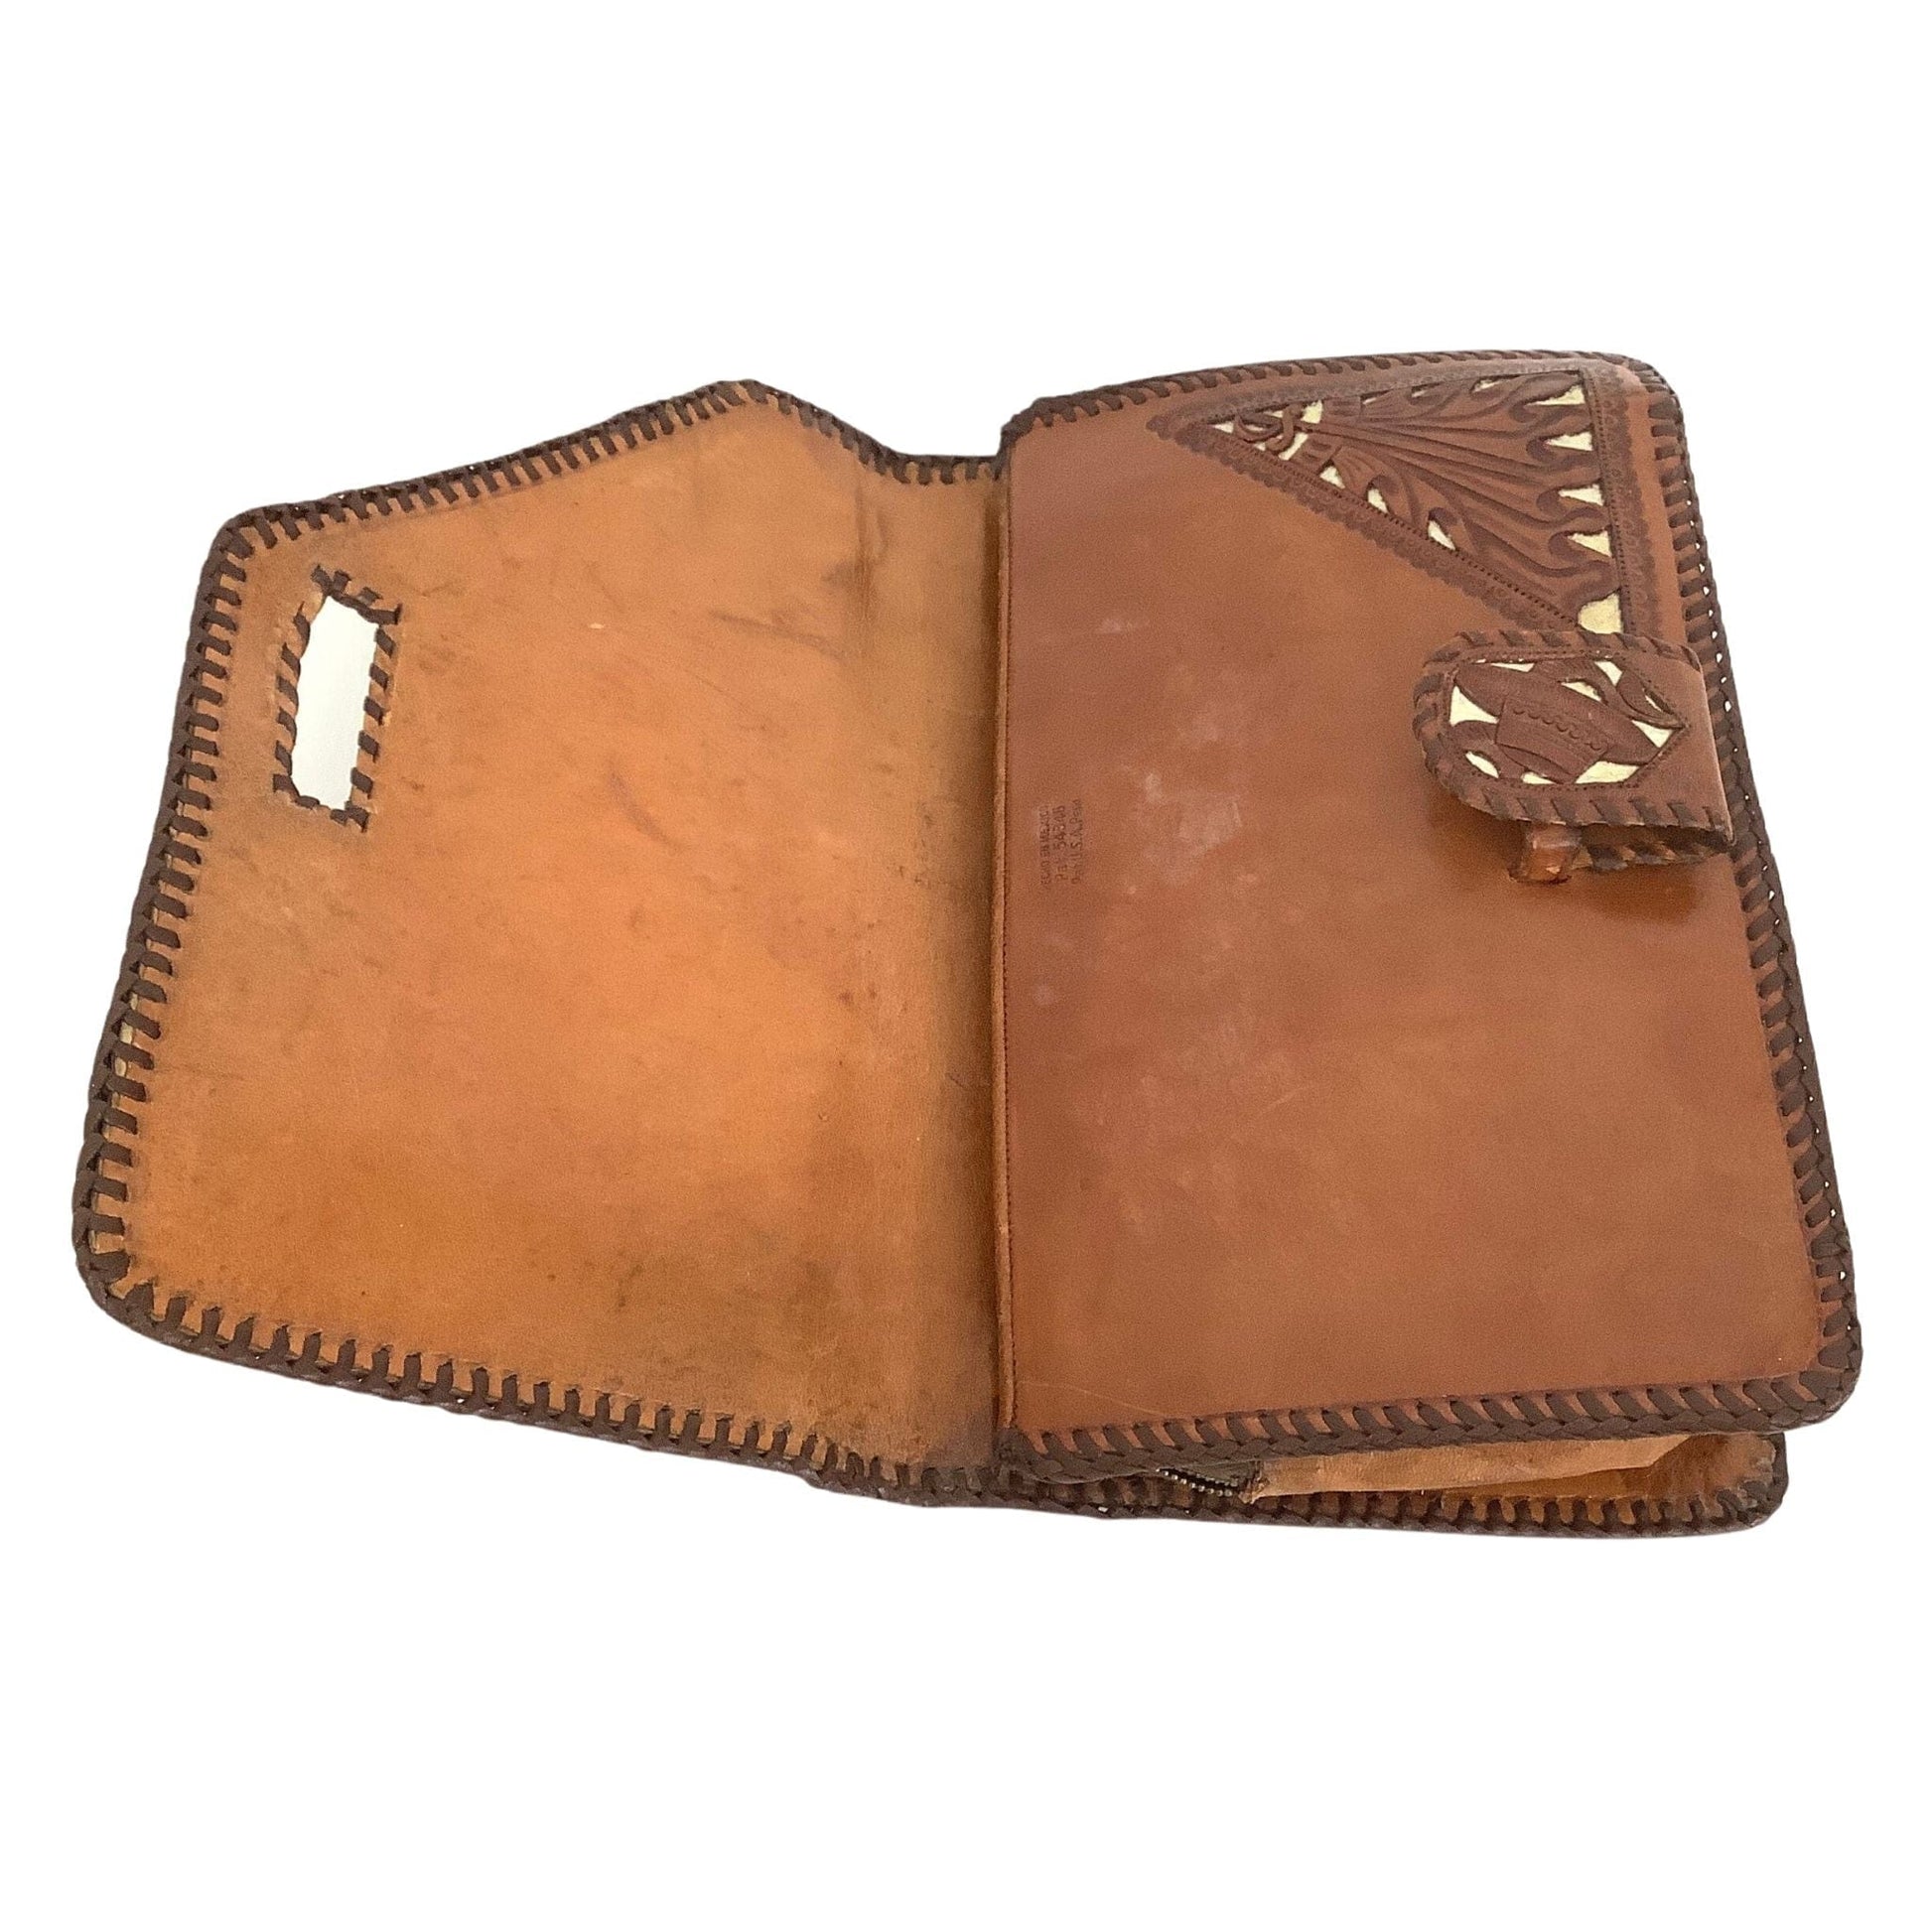 Spanish Revival Clutch Bag Tan / Leather / Vintage 1920s